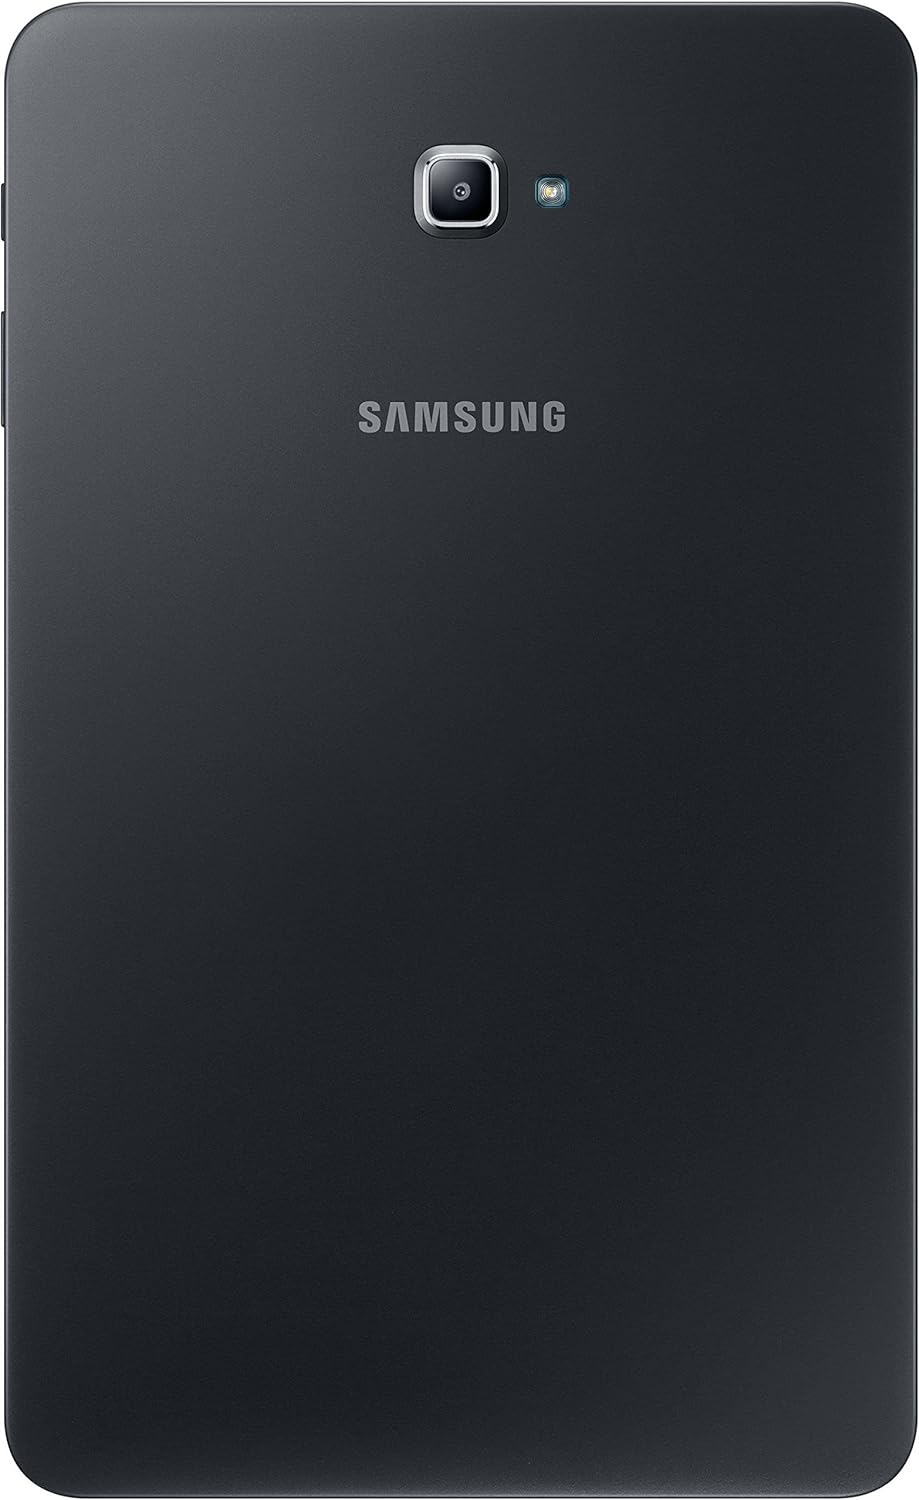 Samsung Galaxy Tab A 10.1" SM-T585 16GB - Black - WiFi - 3G,4G - Micro USB